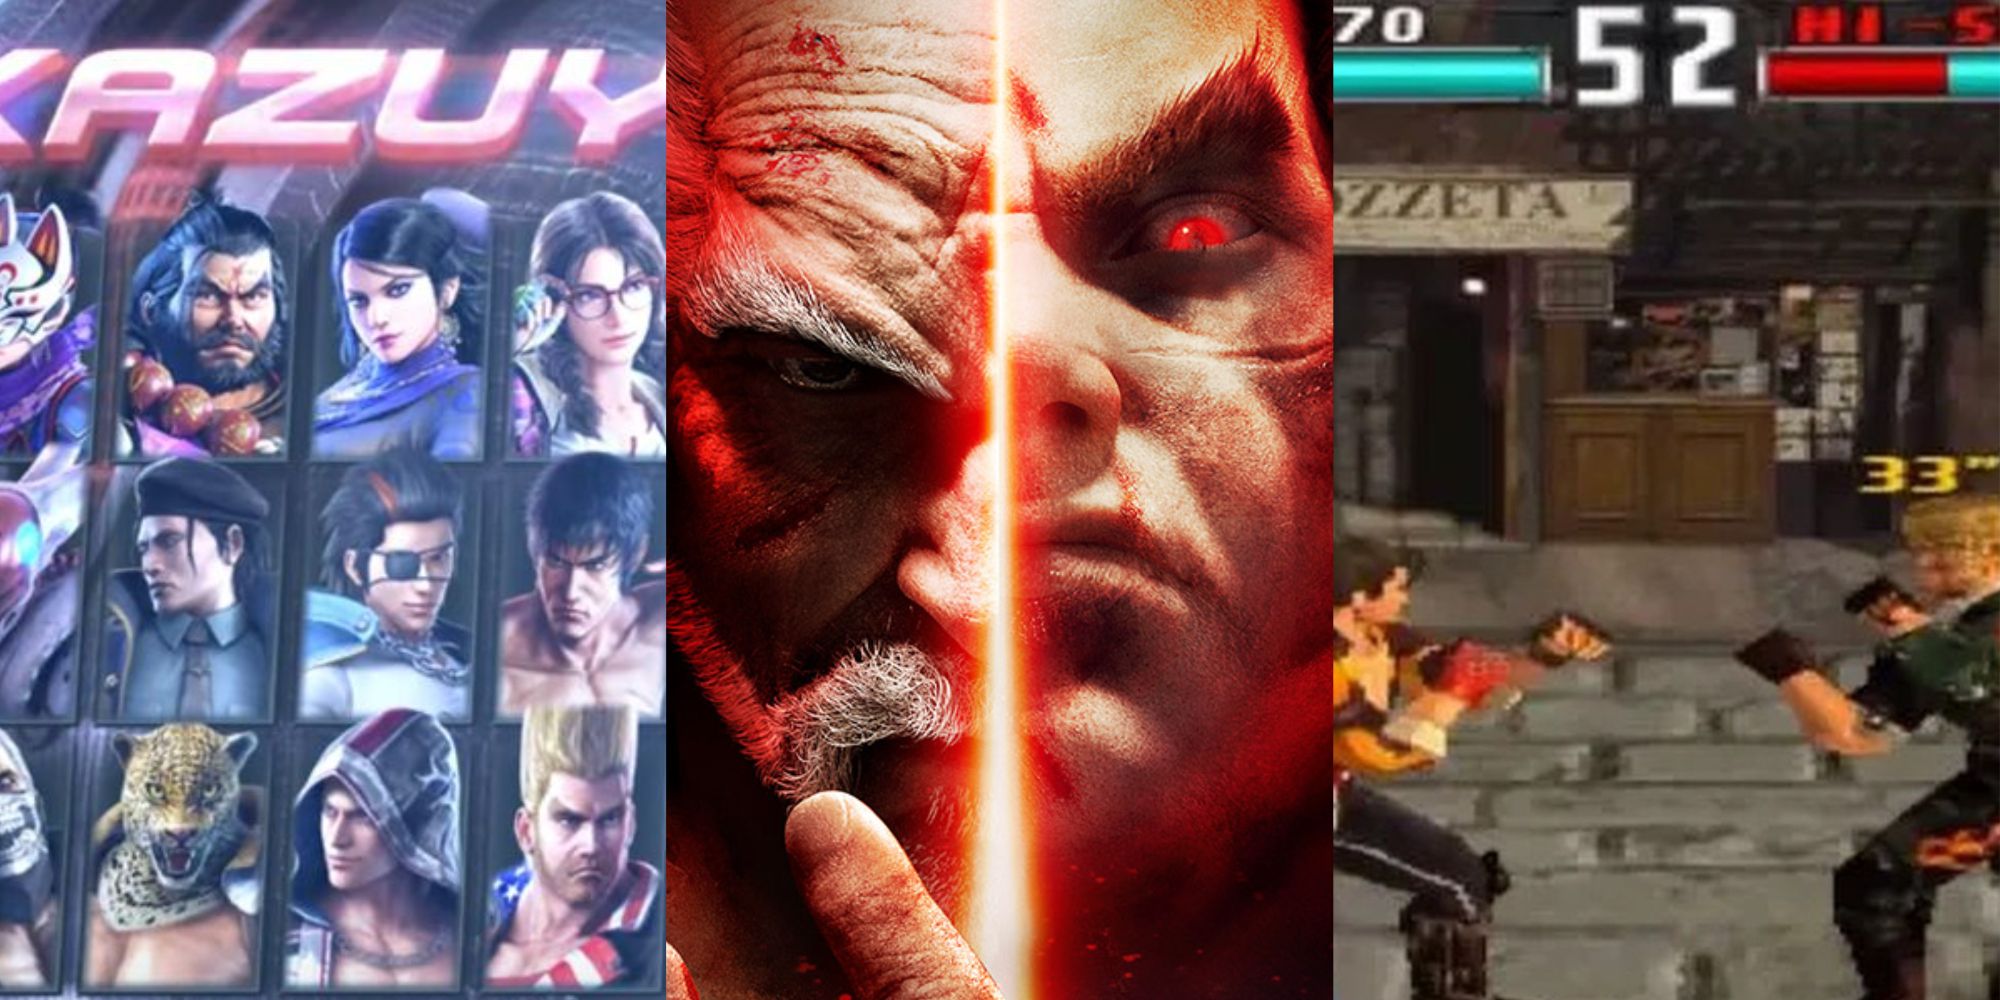 Tekken 7 cover, Tekken Force minigame from Tekken 3, and Character select screen